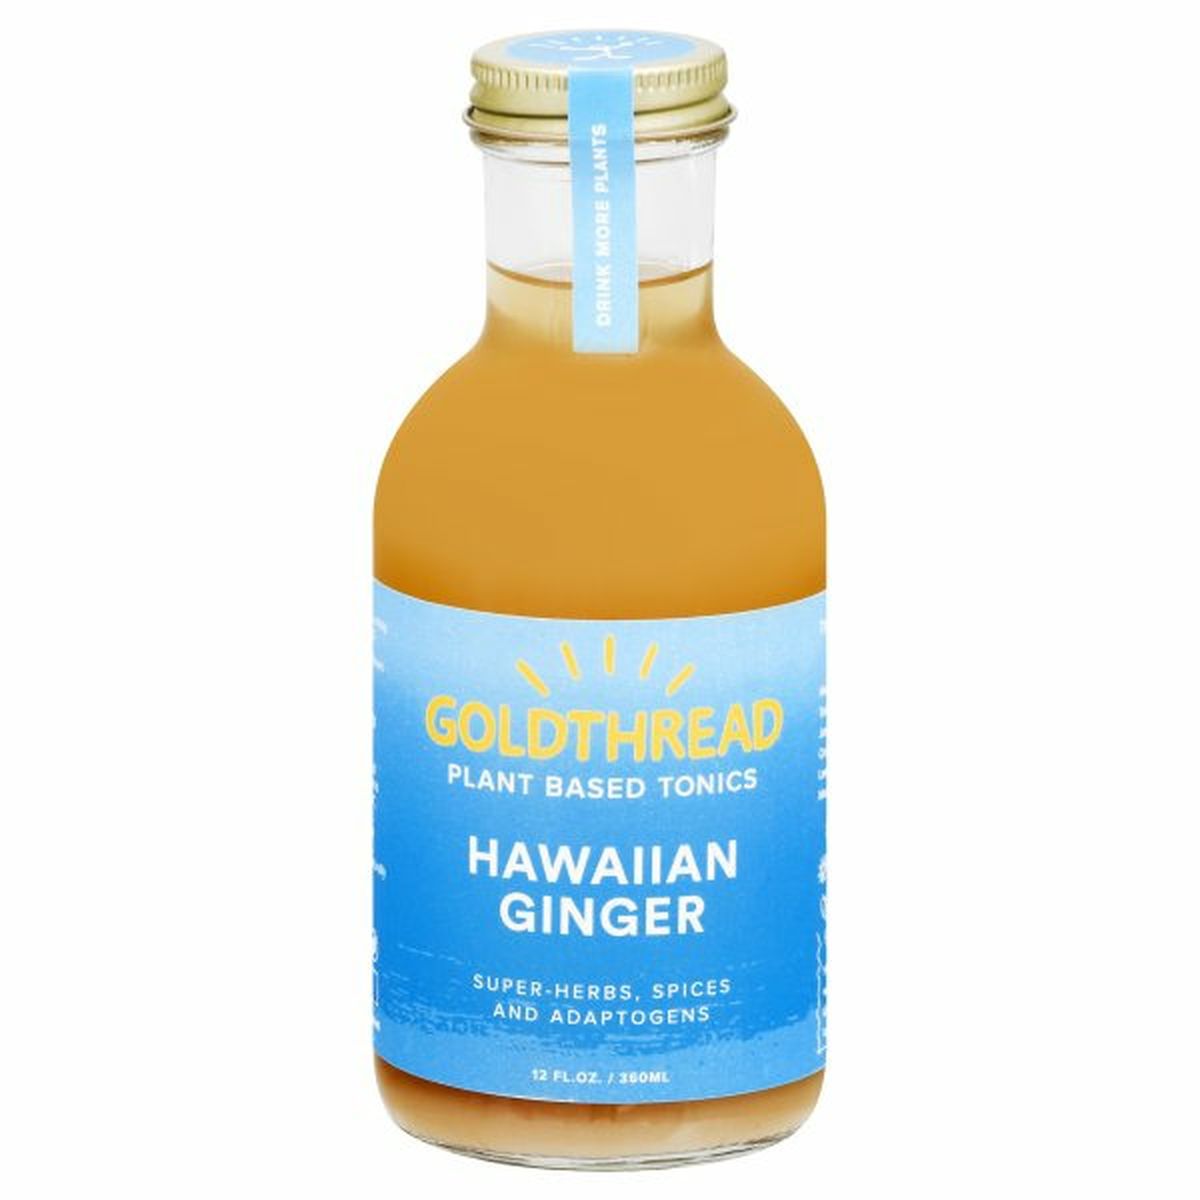 Calories in Goldthread Tonics, Hawaiian Ginger